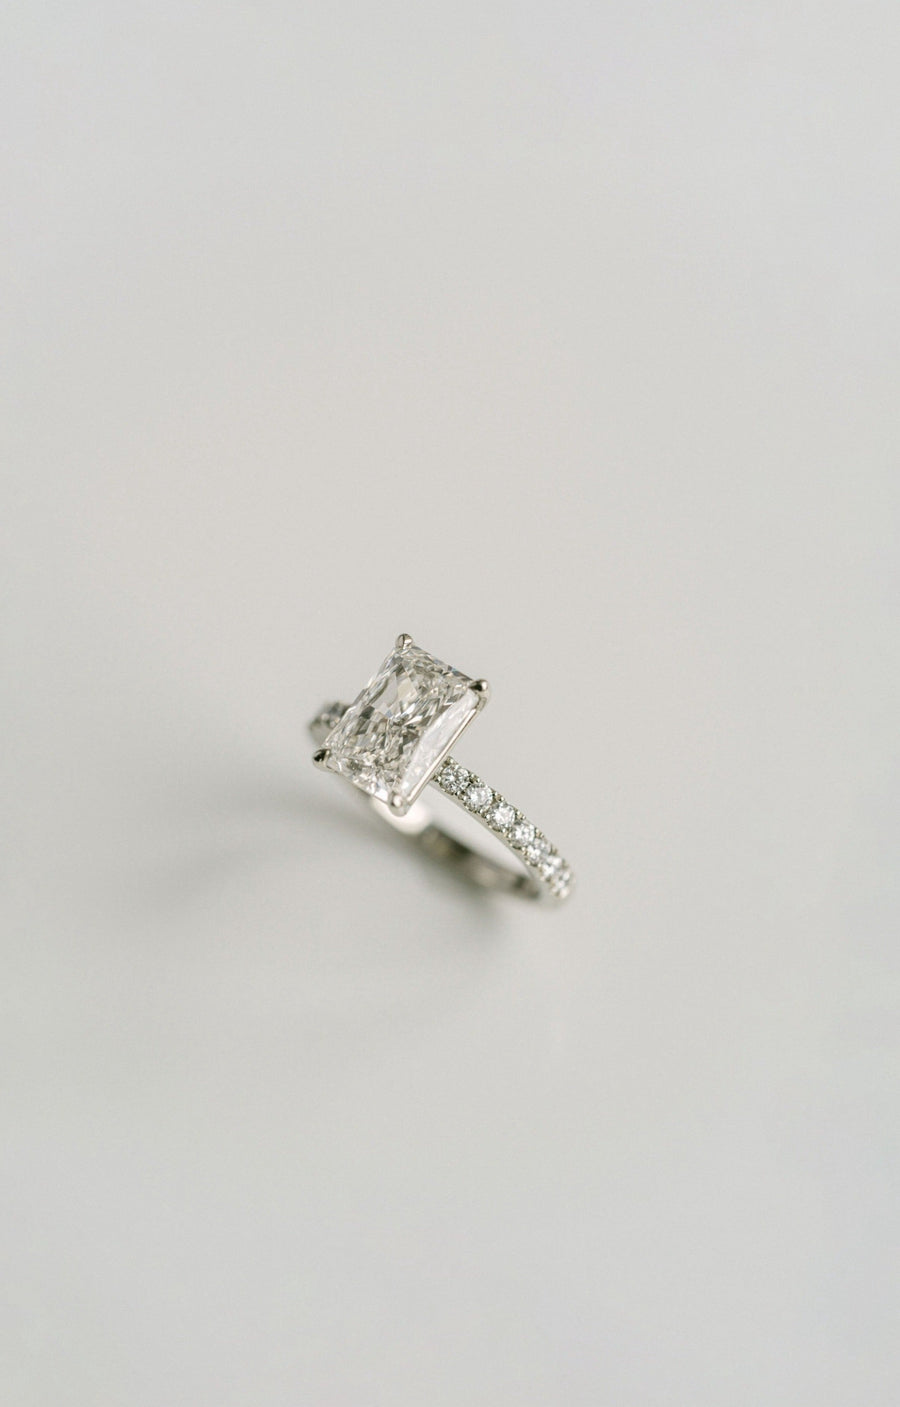 Radiant Cut Diamond Engagement Ring With Diamond Pavé Band, 14k White Gold